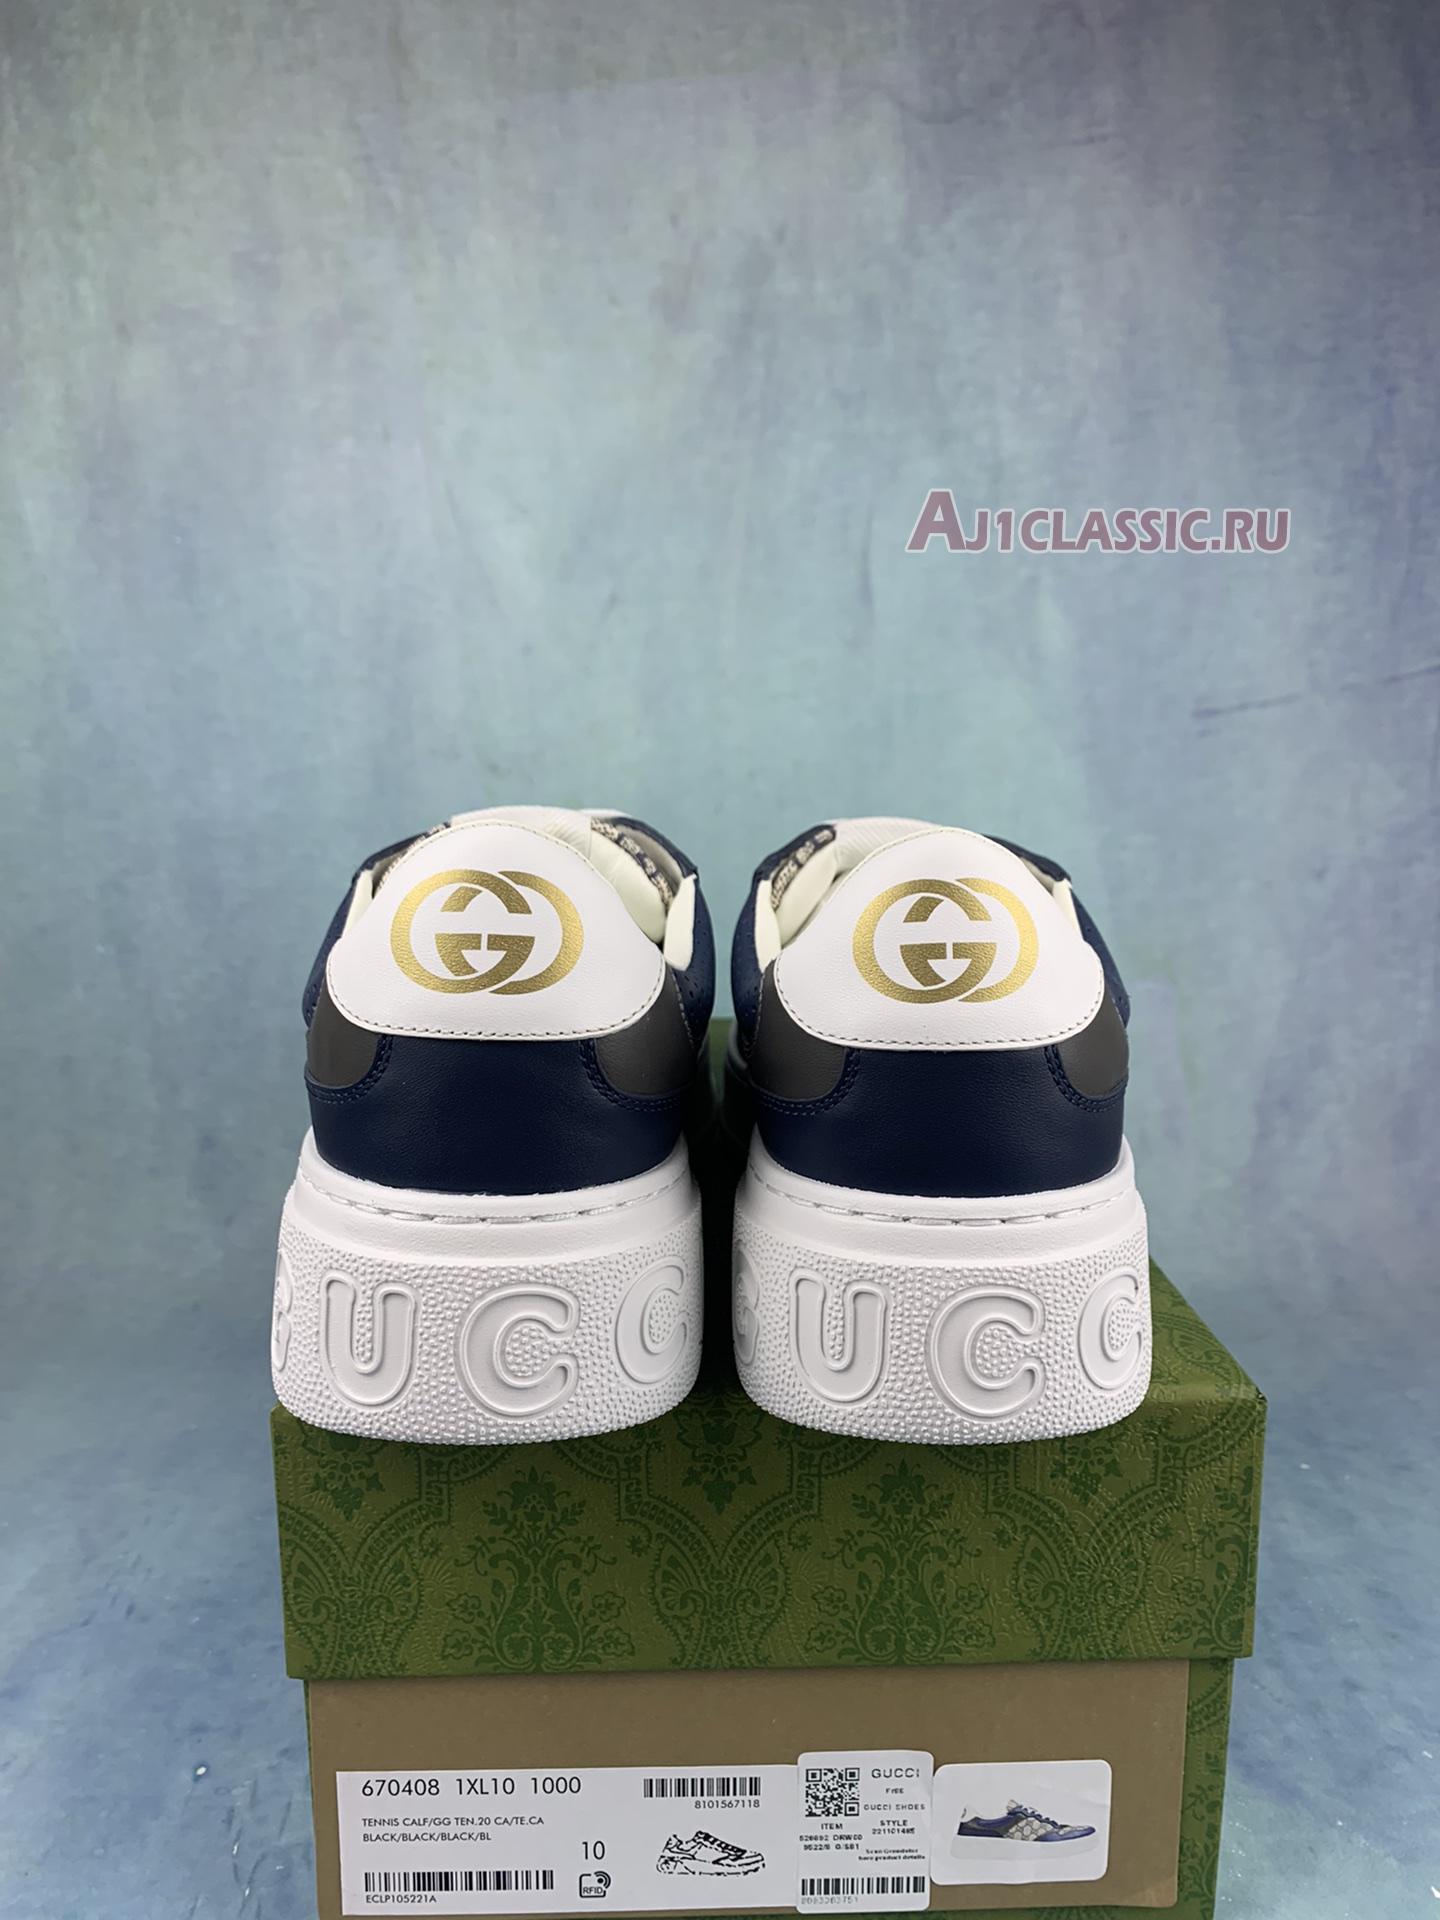 Gucci GG Embossed Sneaker "Beige Blue" 669582 UPGB0 4273